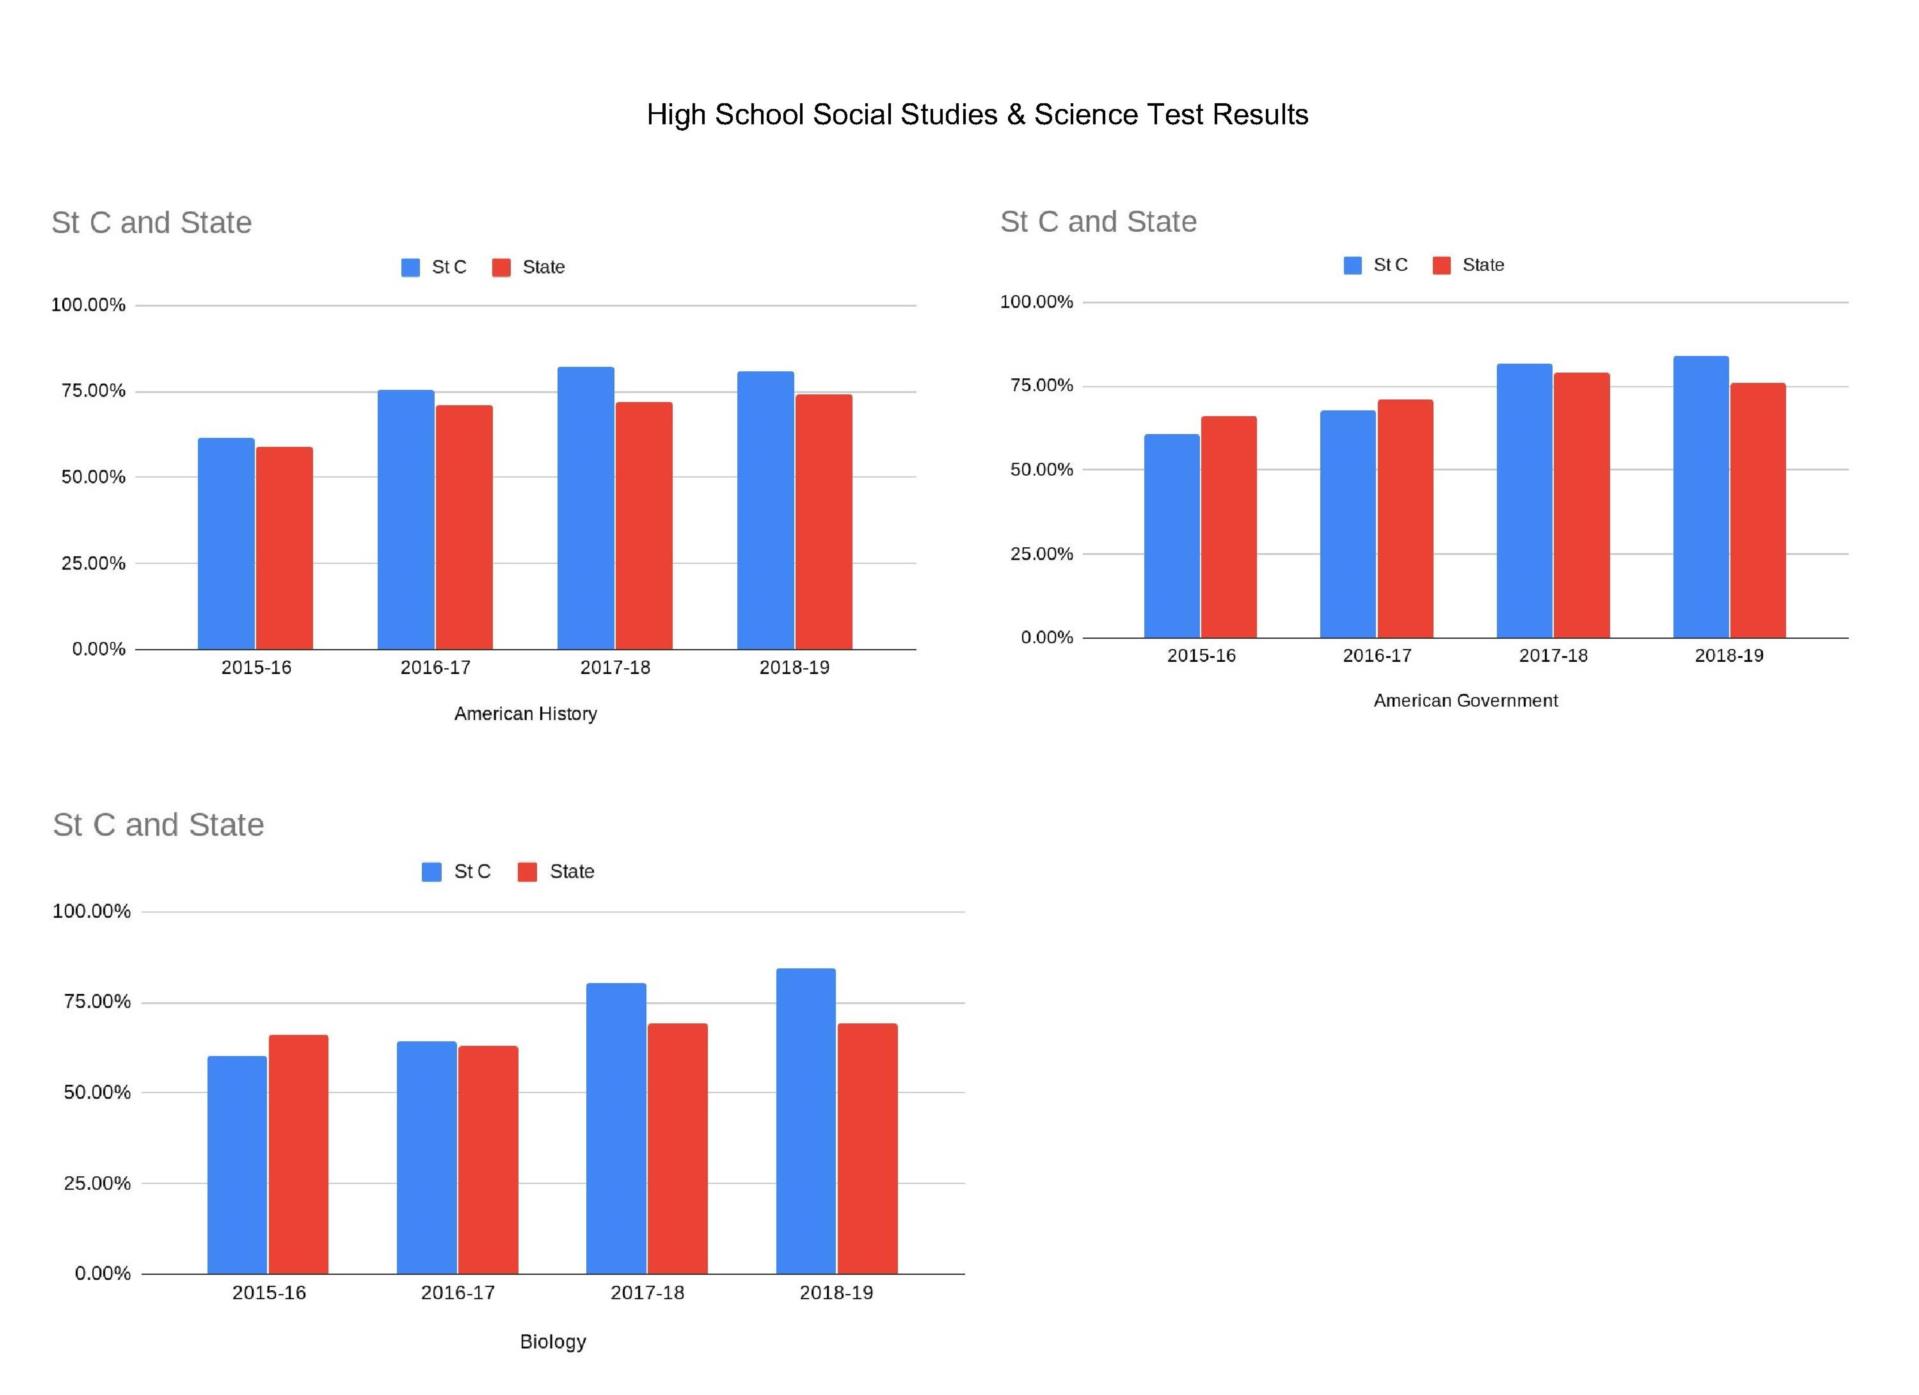 HIGH SCHOOL SOCIAL STUDIES & SCIENCE TEST RESULTS